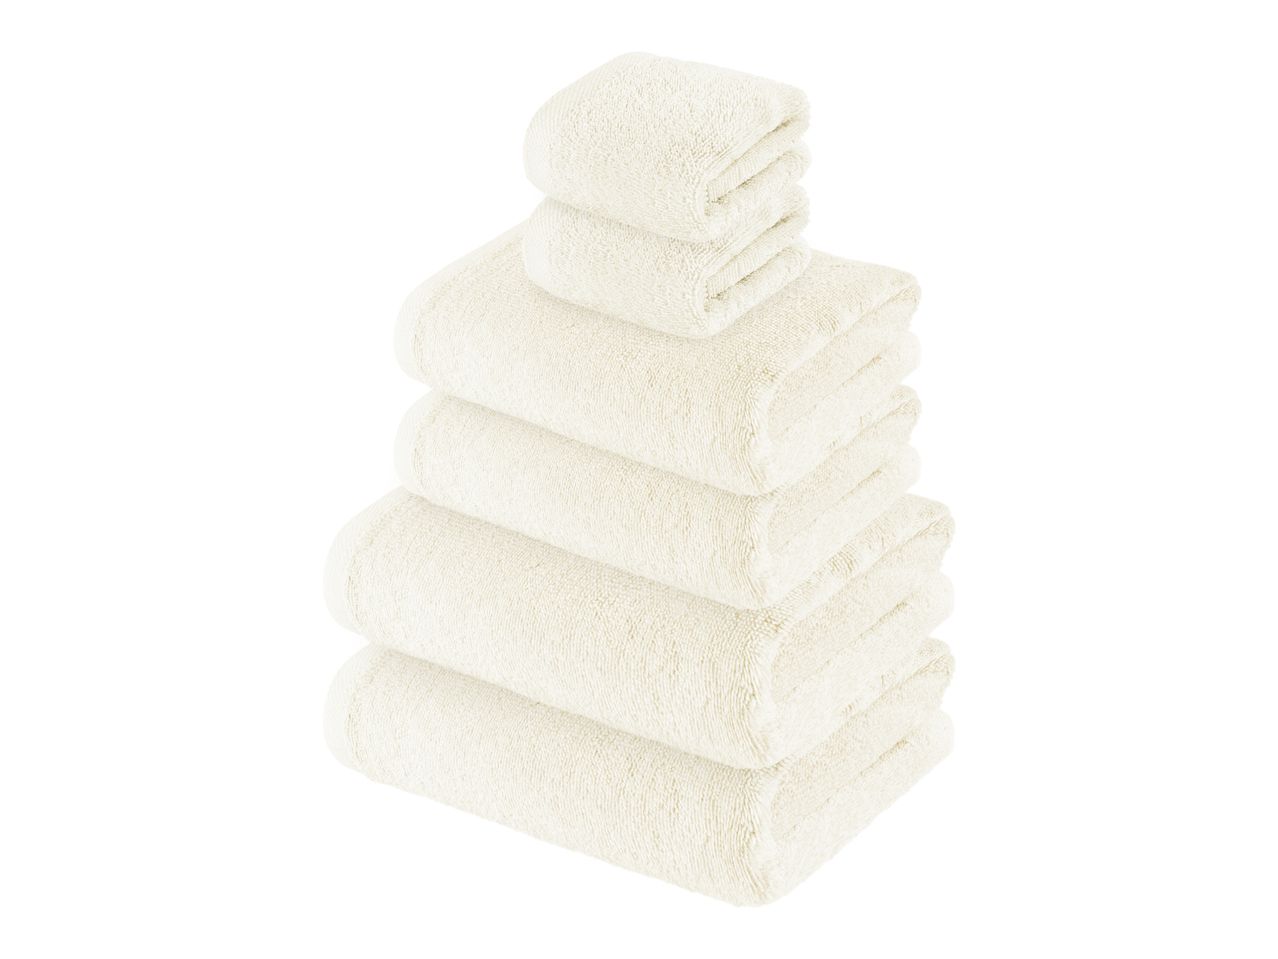 Set asciugamani , prezzo 9.99 EUR 
Set asciugamani 6 pezzi 
- 2 asciugamani, 30 ...